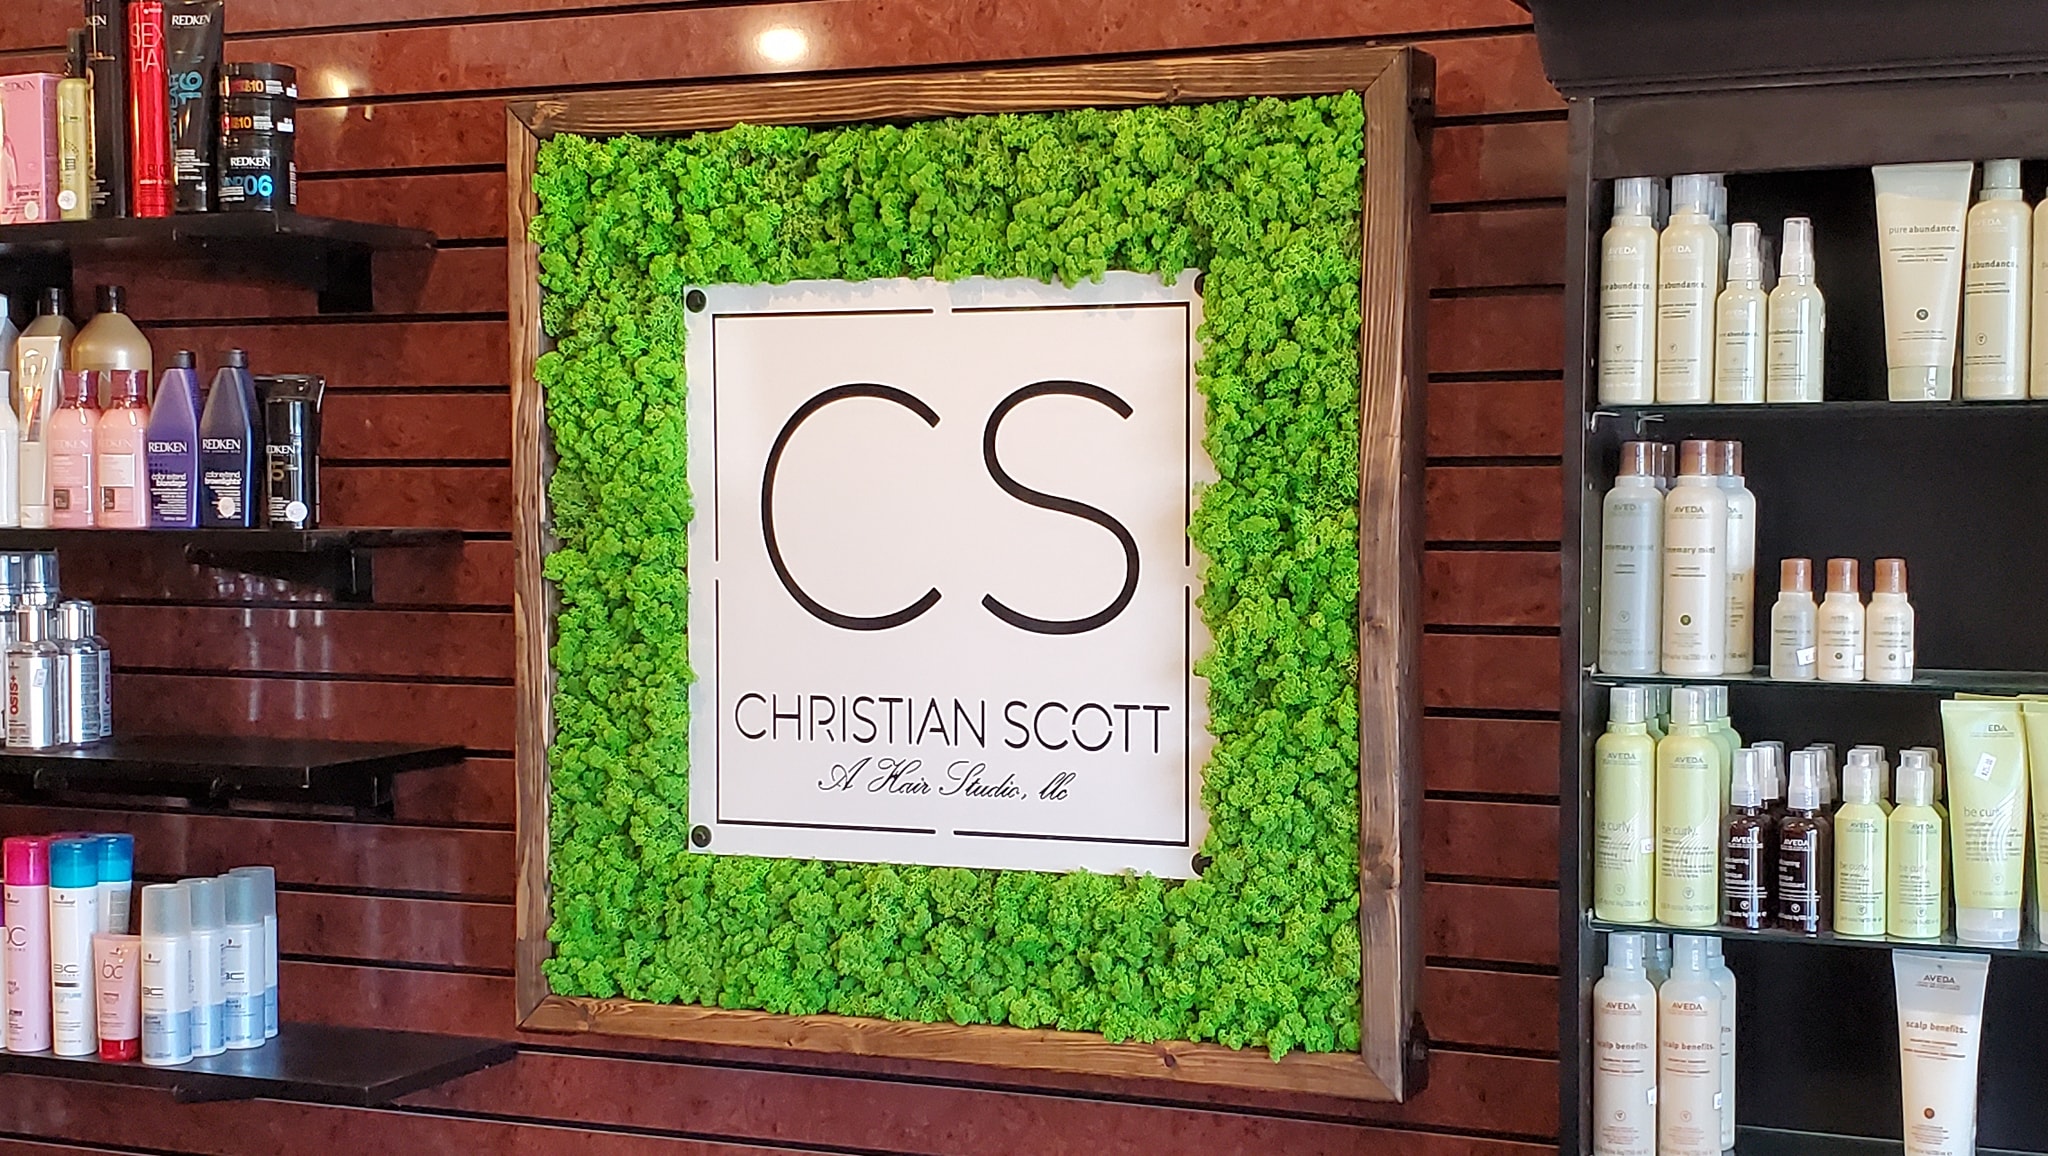 Christian Scott - A Hair Studio, LLC Logo